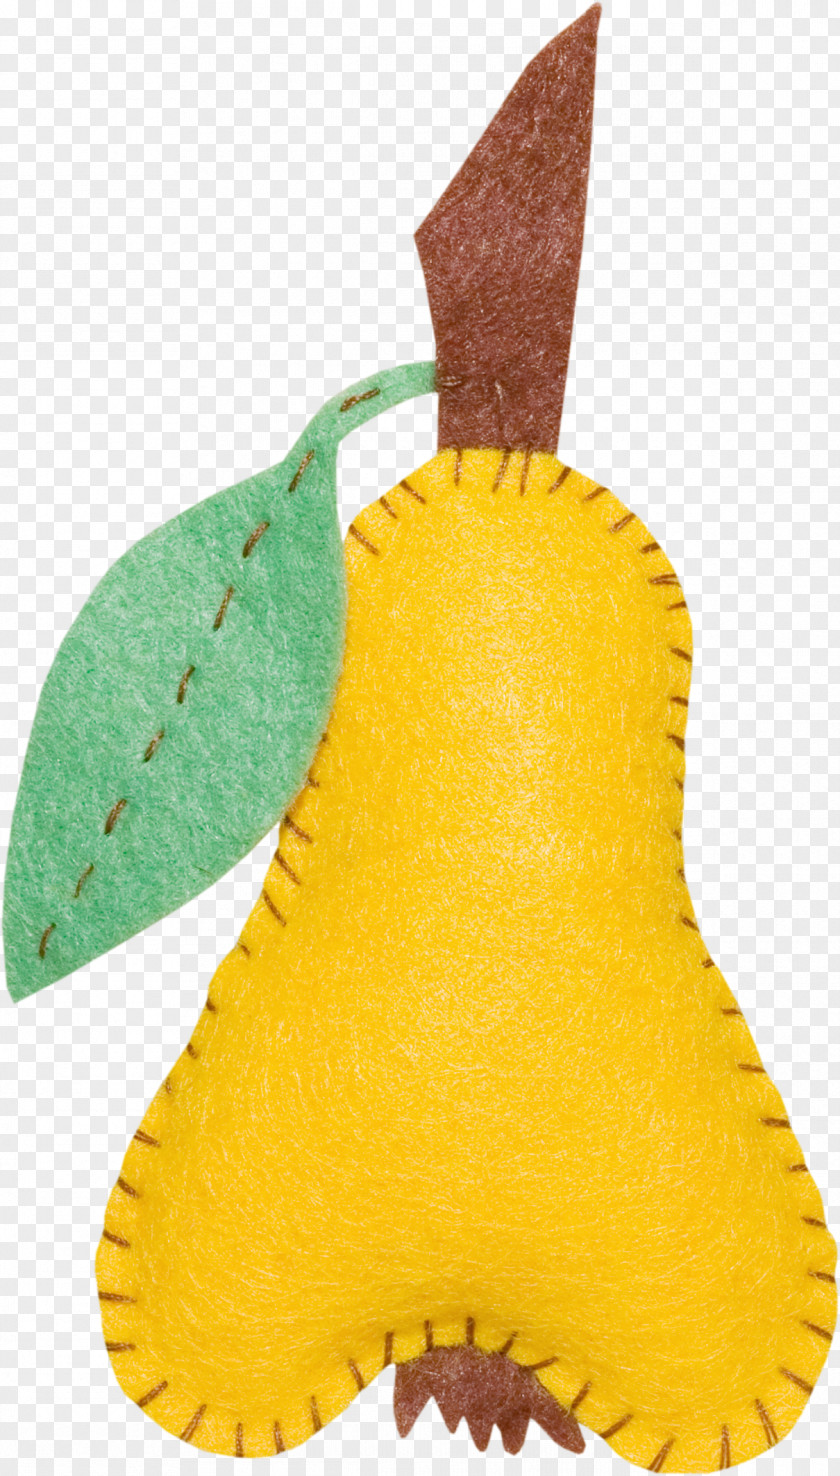 Orange Creative Pears Creativity Pear PNG